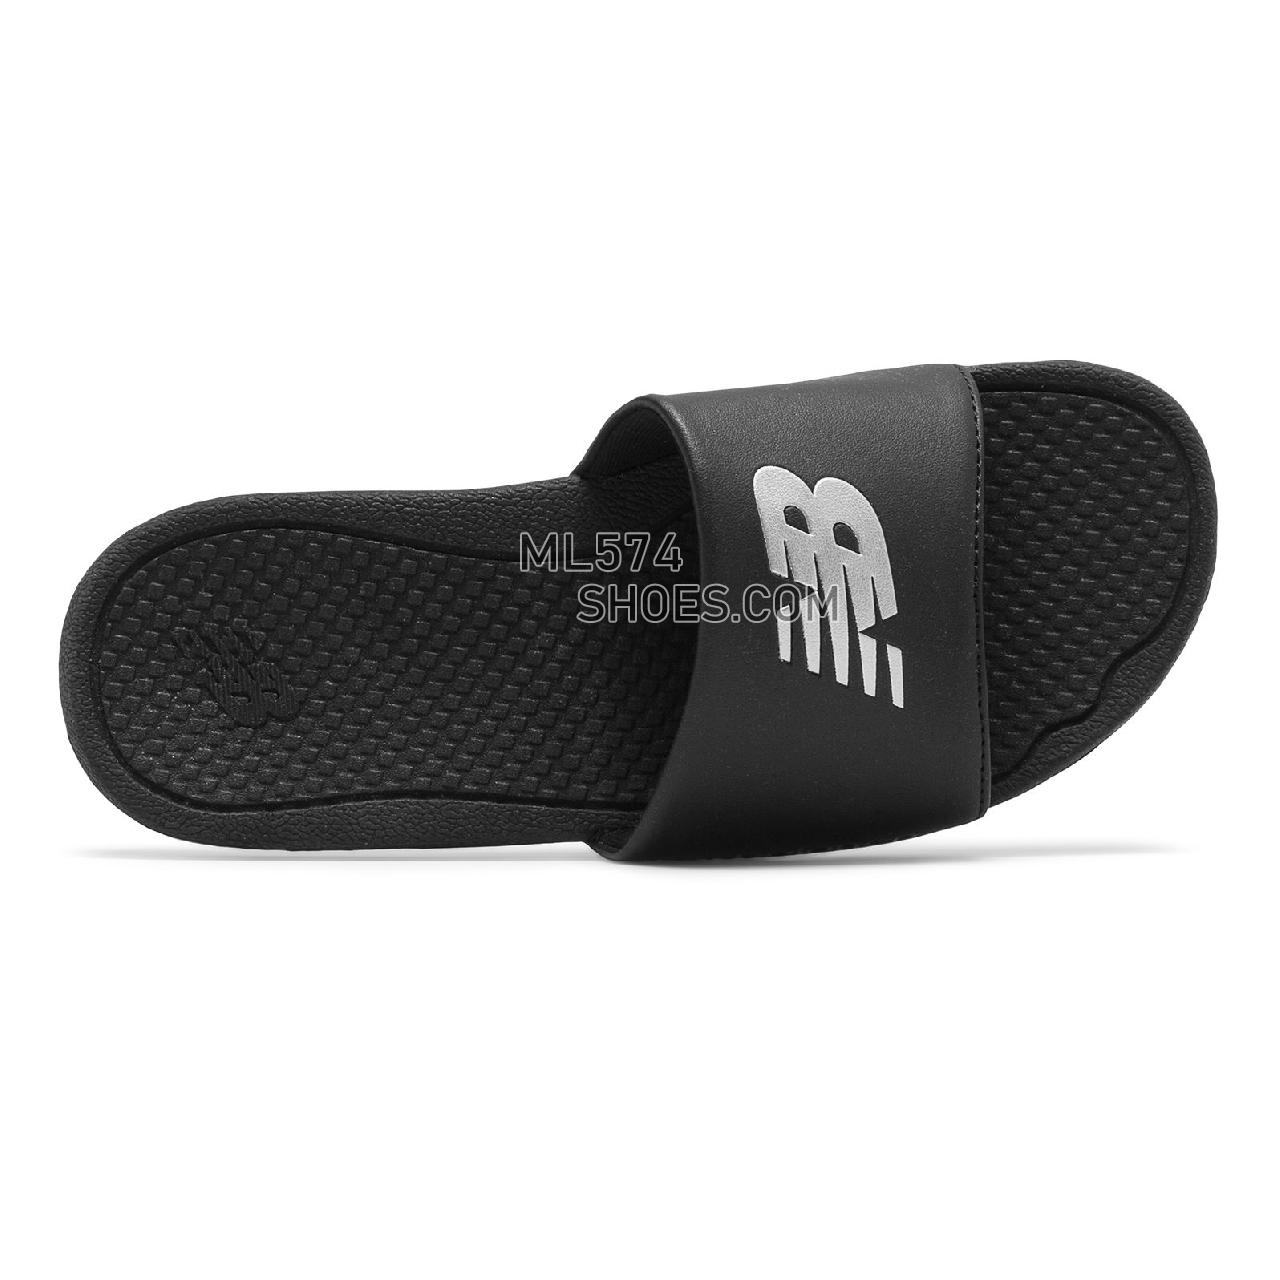 New Balance NB Pro Slide - Women's 3068 - Sandals Black with White - W3068BKW